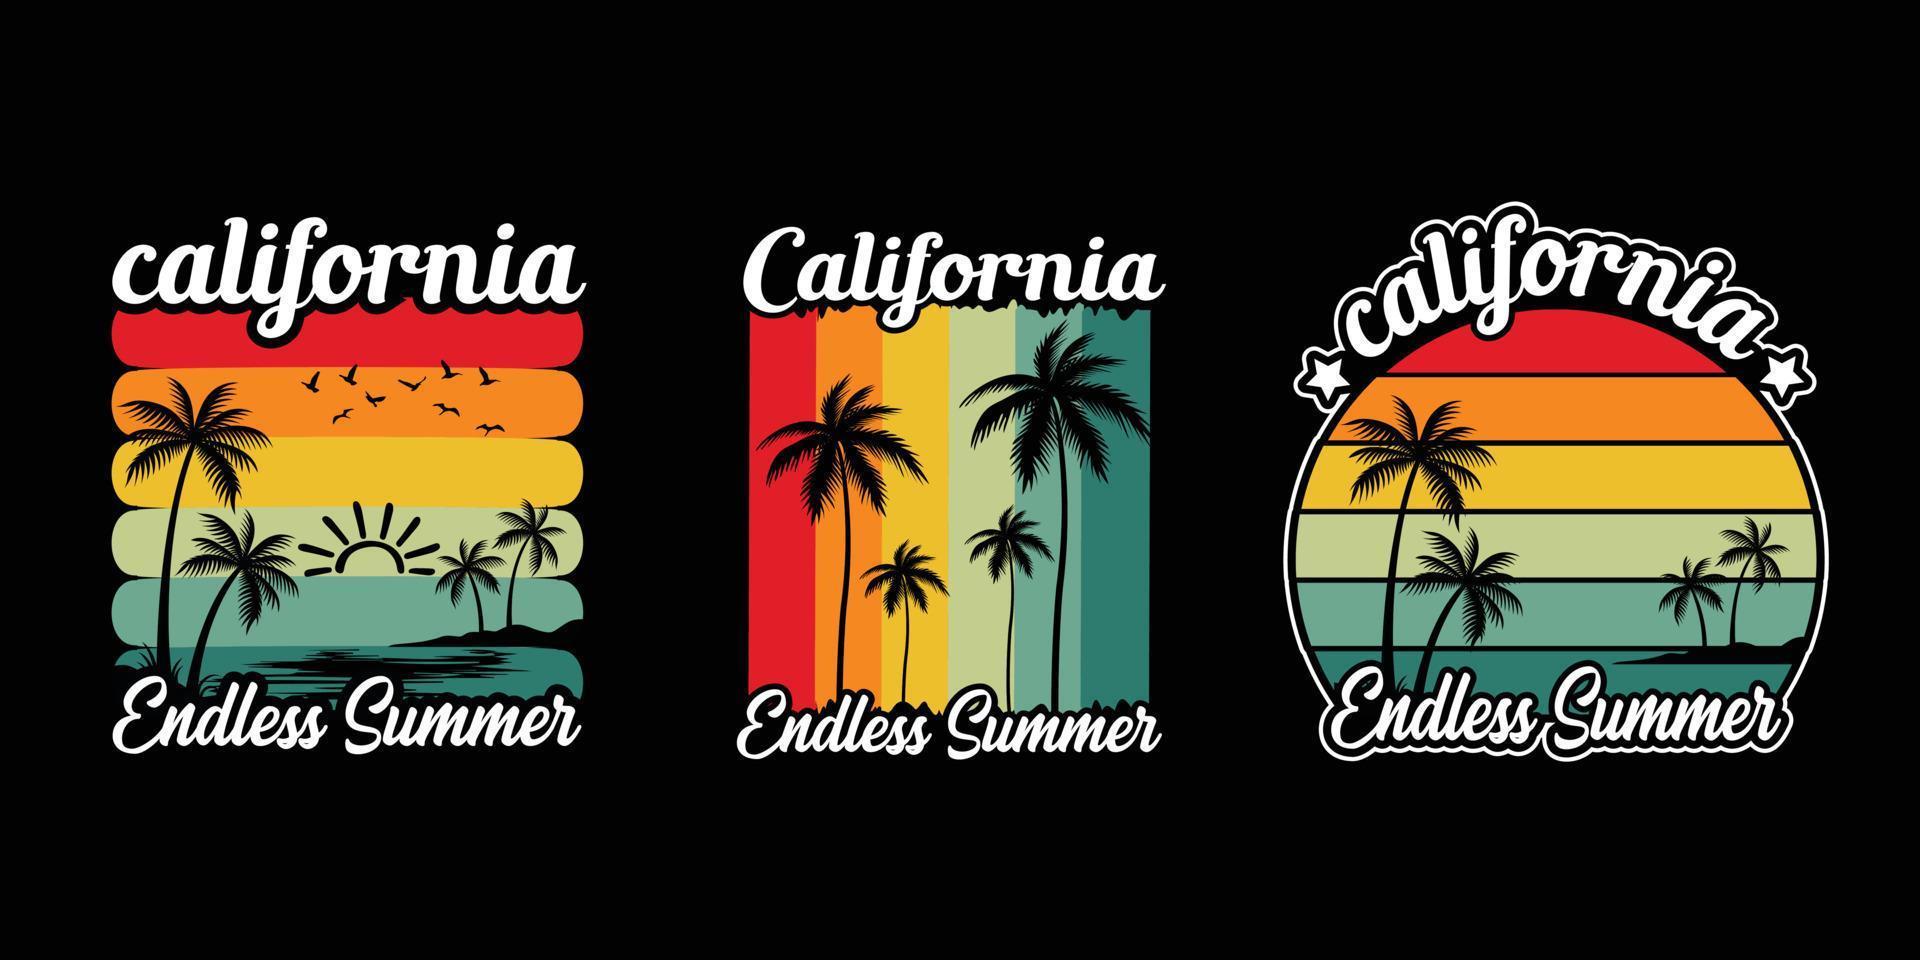 wijnoogst retro zonsondergang zomer strand t-shirt ontwerp voor zomer gevoel enkel en alleen, Californië strand genieten zomer met palm bomen ligstoel paraplu t-shirt grafiek banier, poster, folder vector illustratie